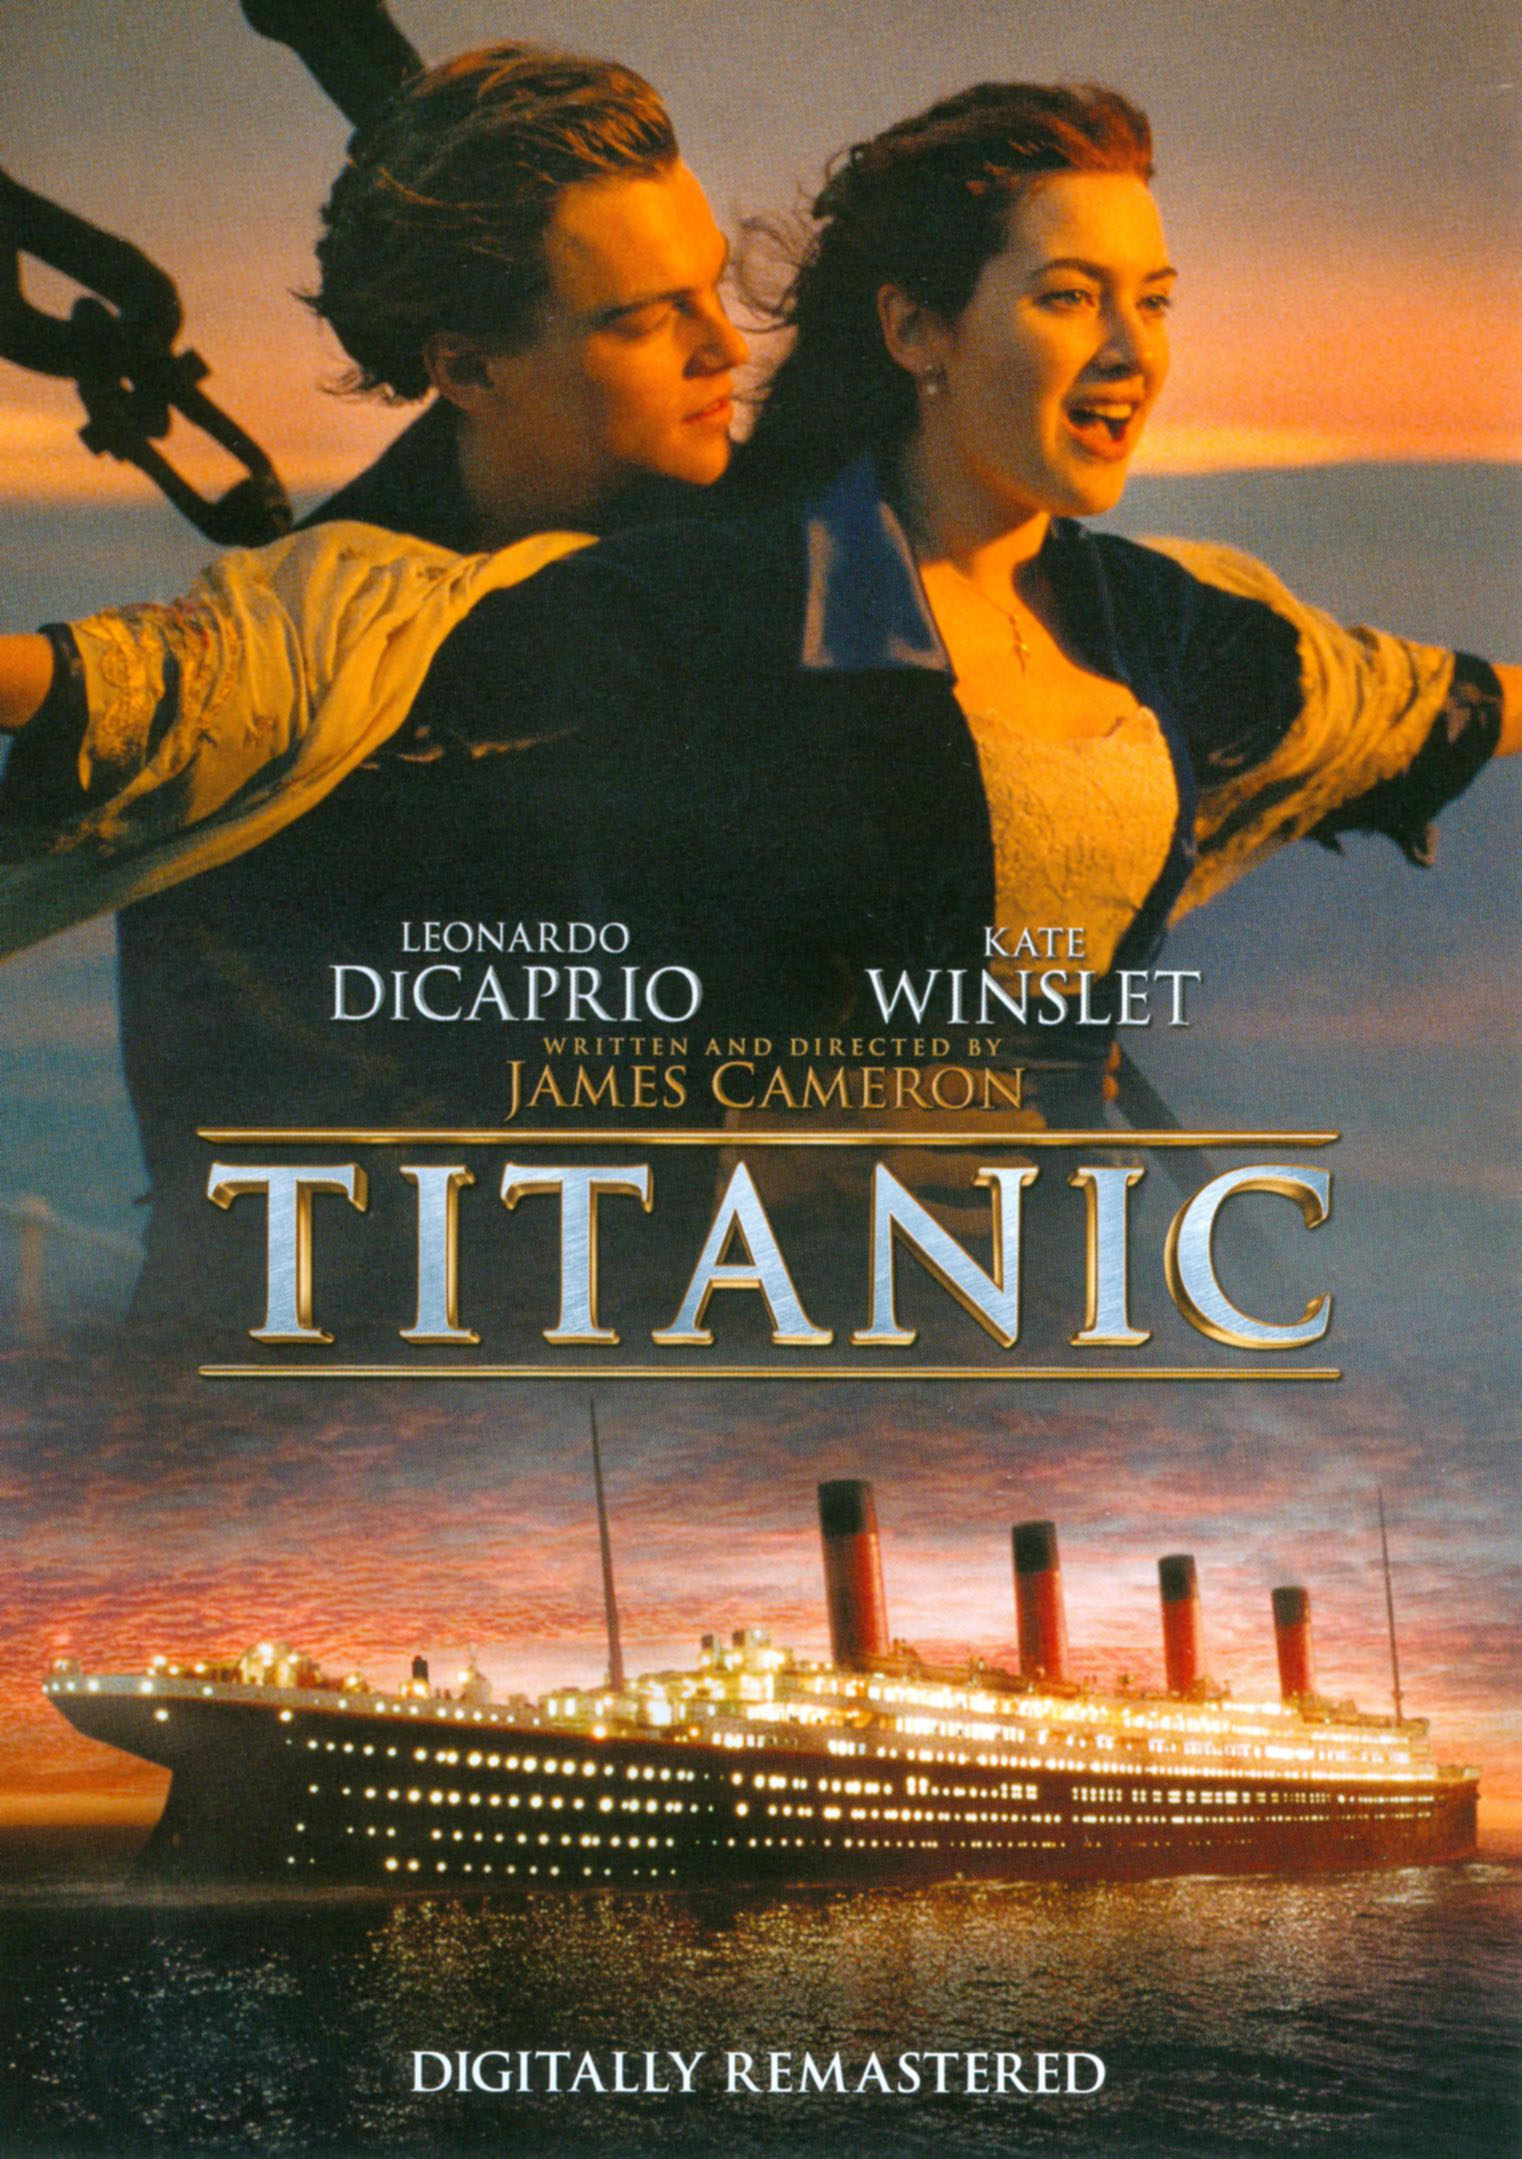 Titanic [Includes Digital Copy] [DVD] [1997] - Best Buy